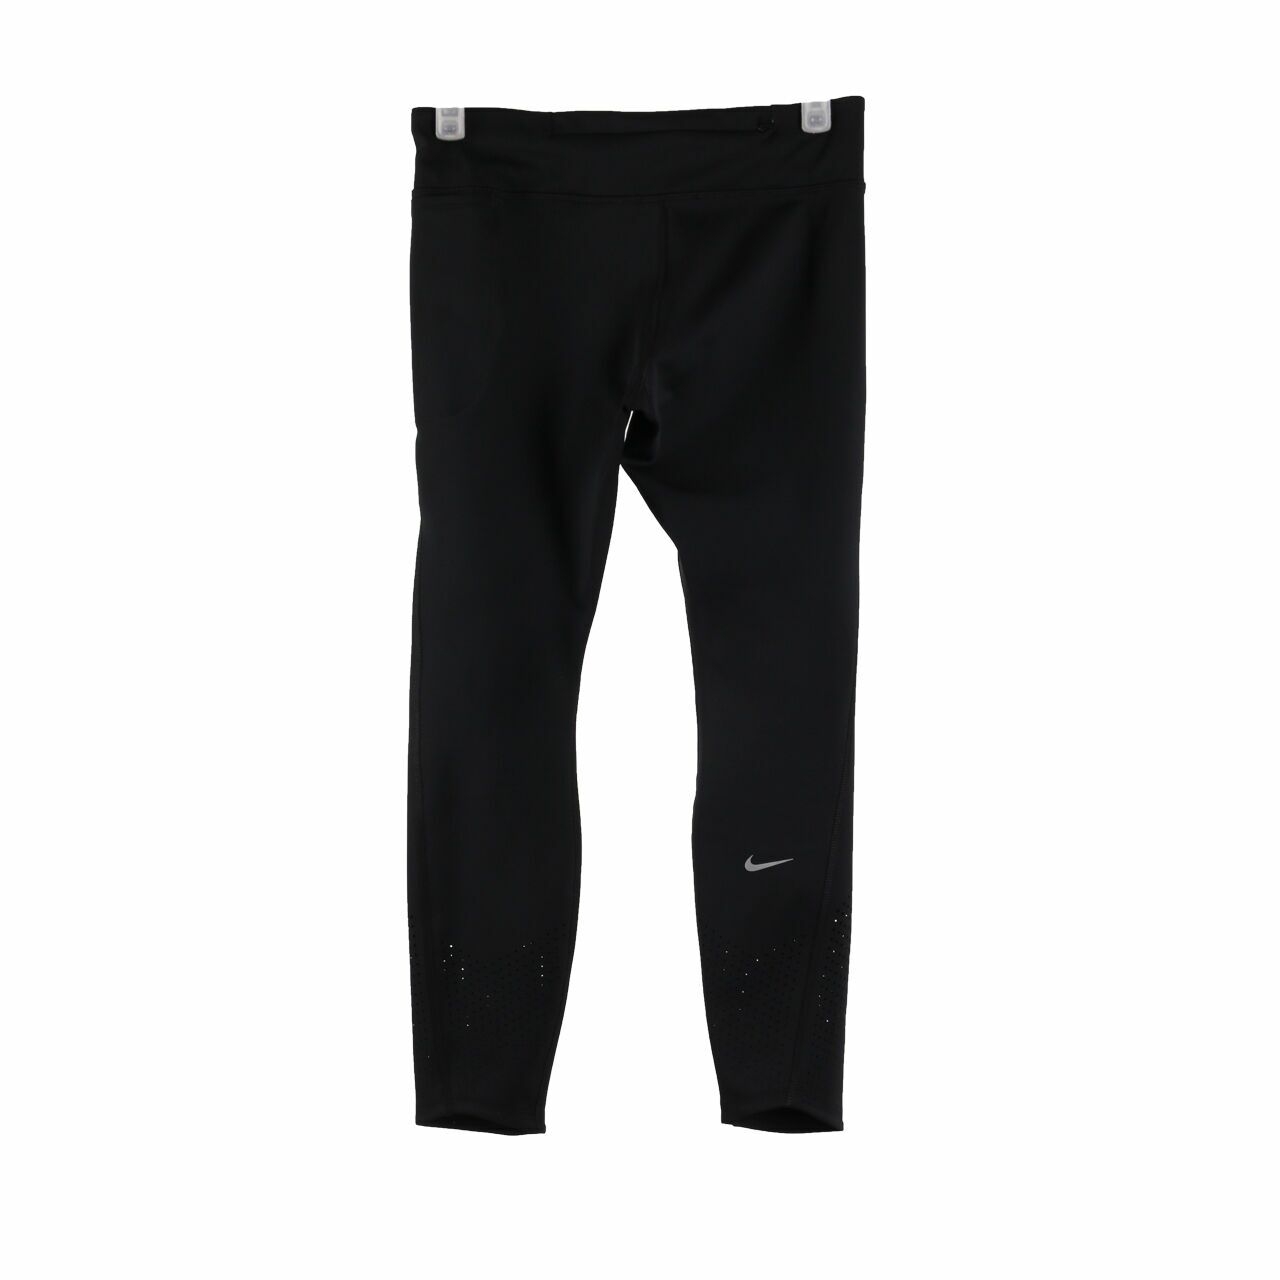 Nike Black Legging Pants Sport